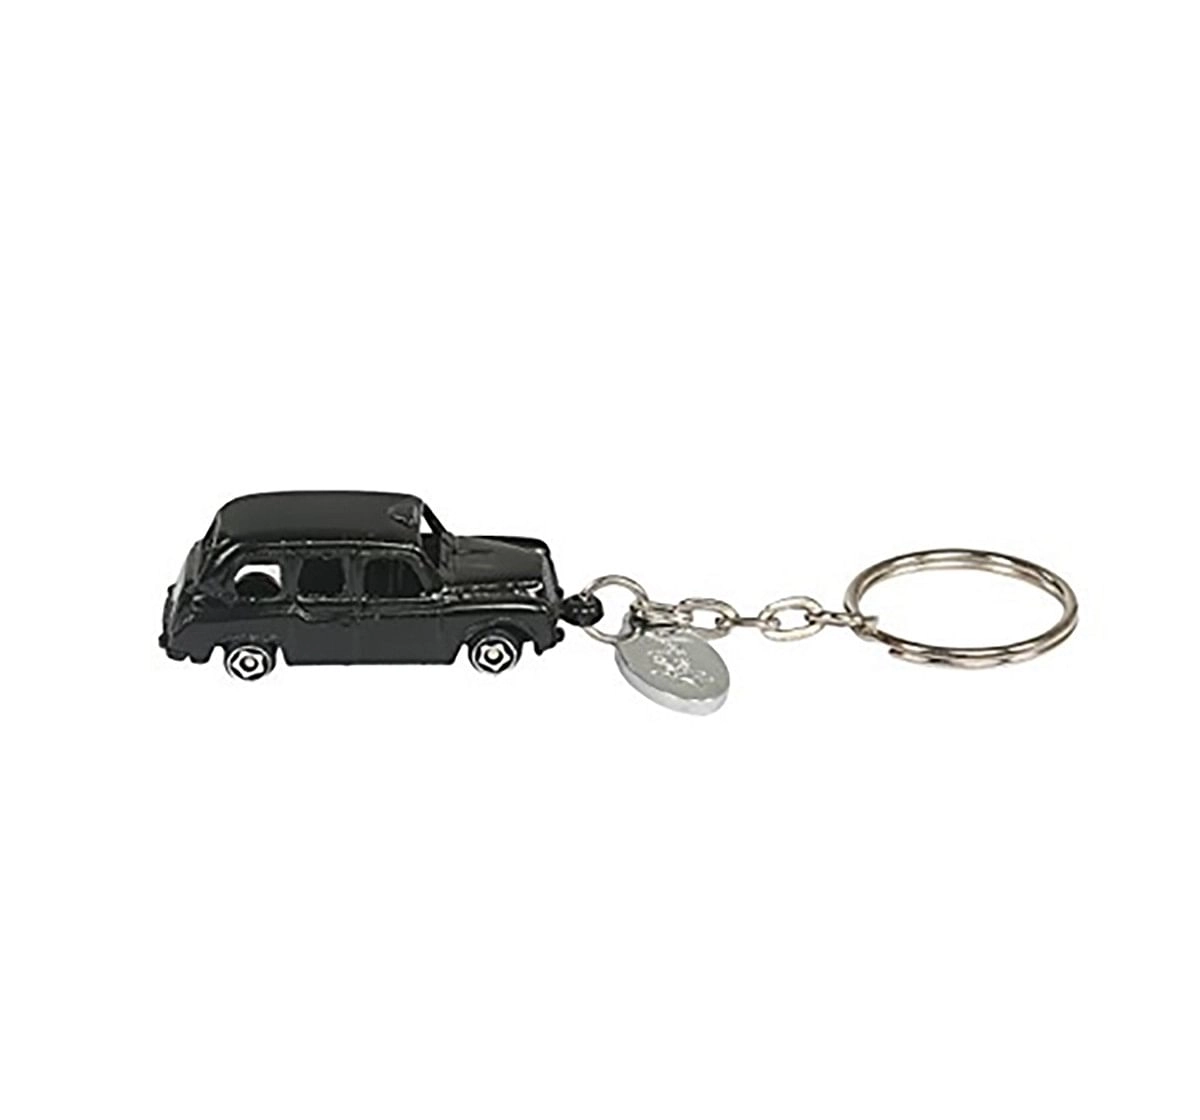 Hamleys London Taxi Keychain, Black Plush Accessories for Kids age 12M+ - 7 Cm (Black)